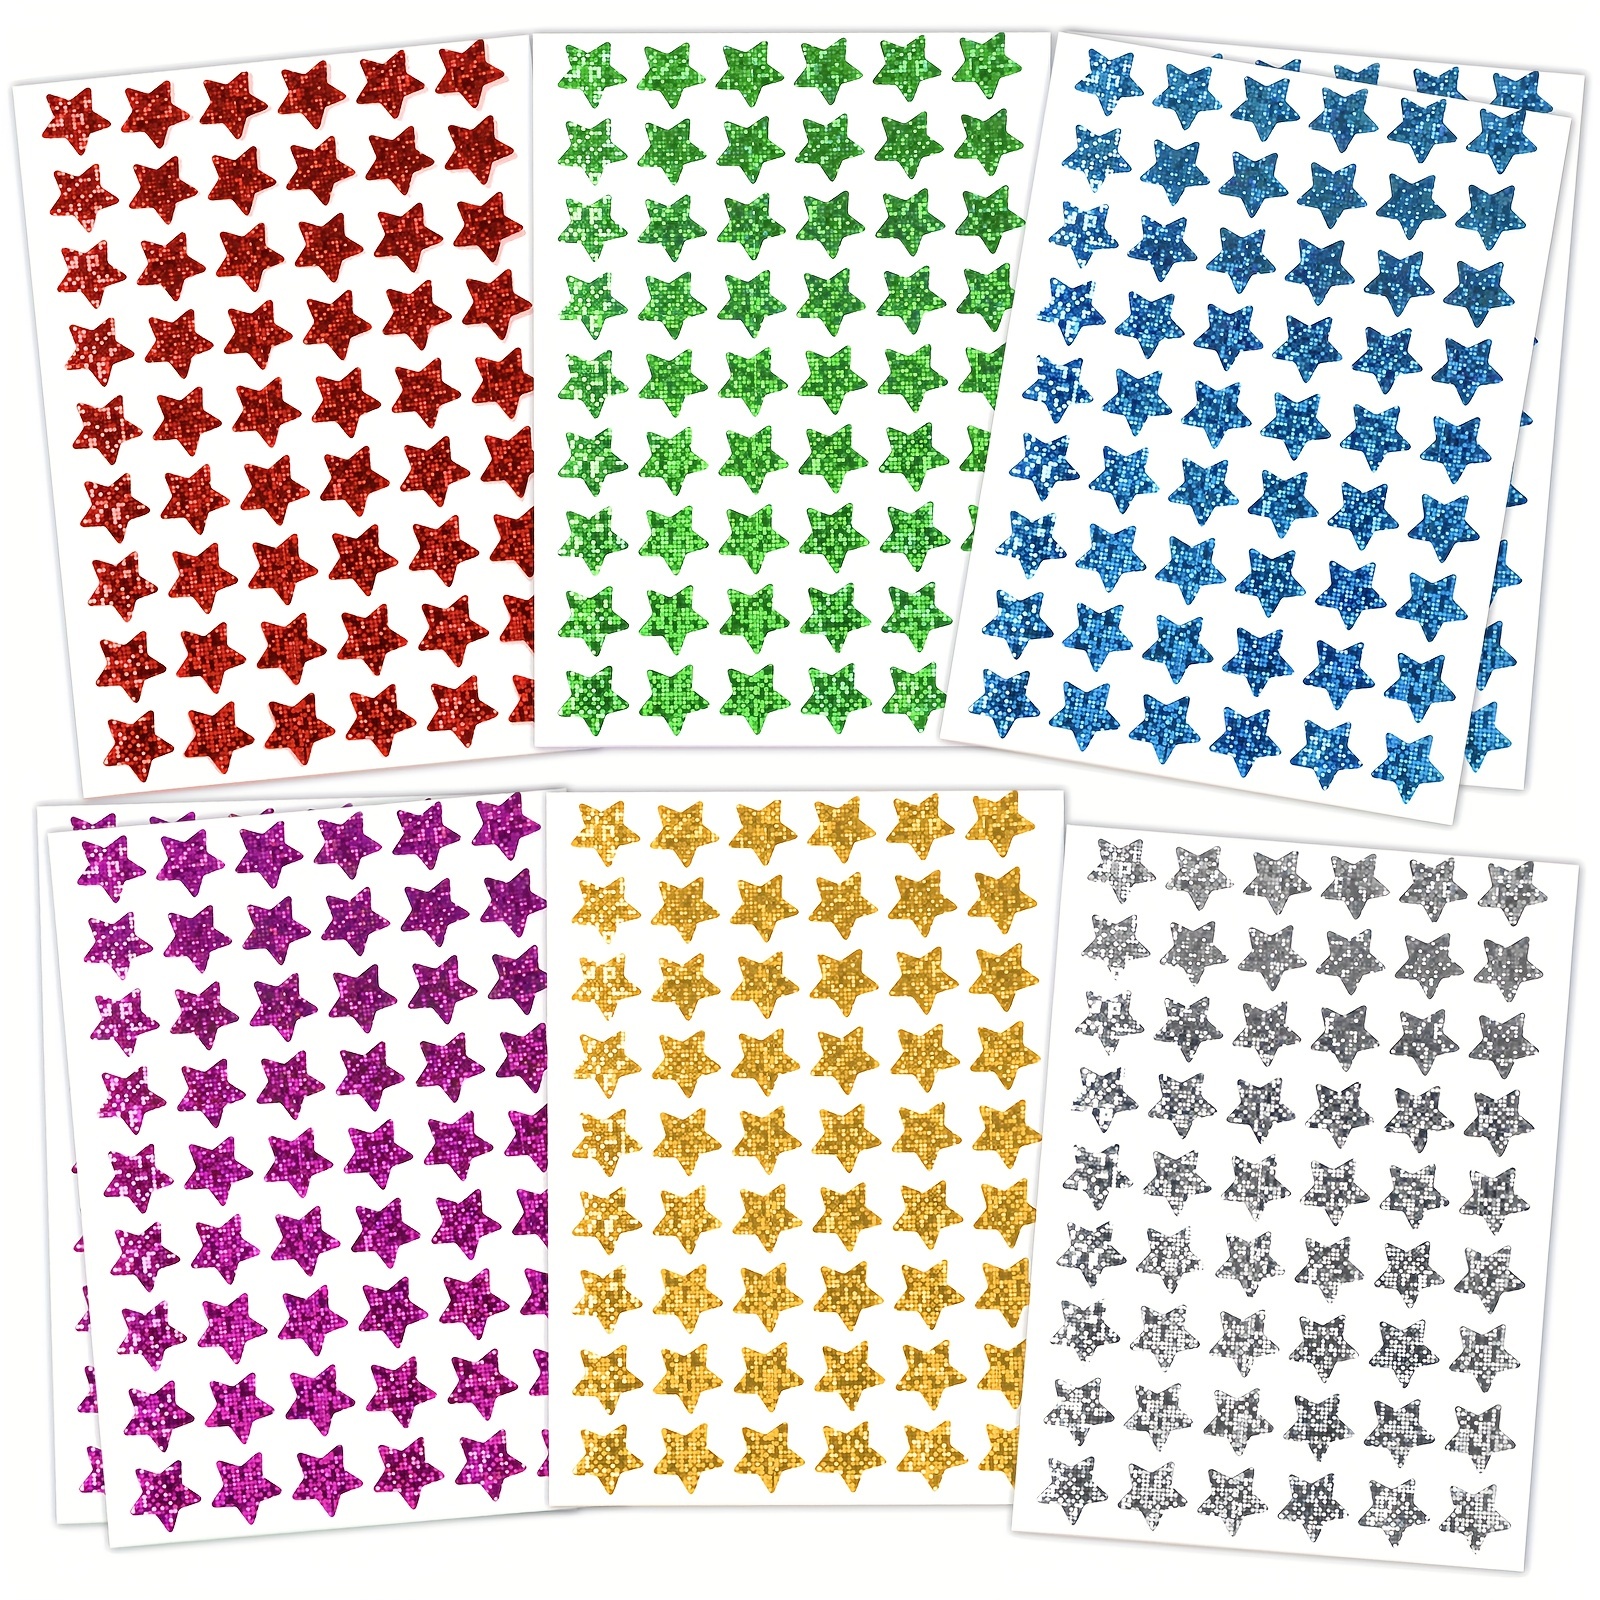 

972pcs/1620pcs, 6 Colors, Shiny Small Star Stickers For Rewarding, For Reward Chart, School Classroom Teacher Supplies, 0.6" Diameter